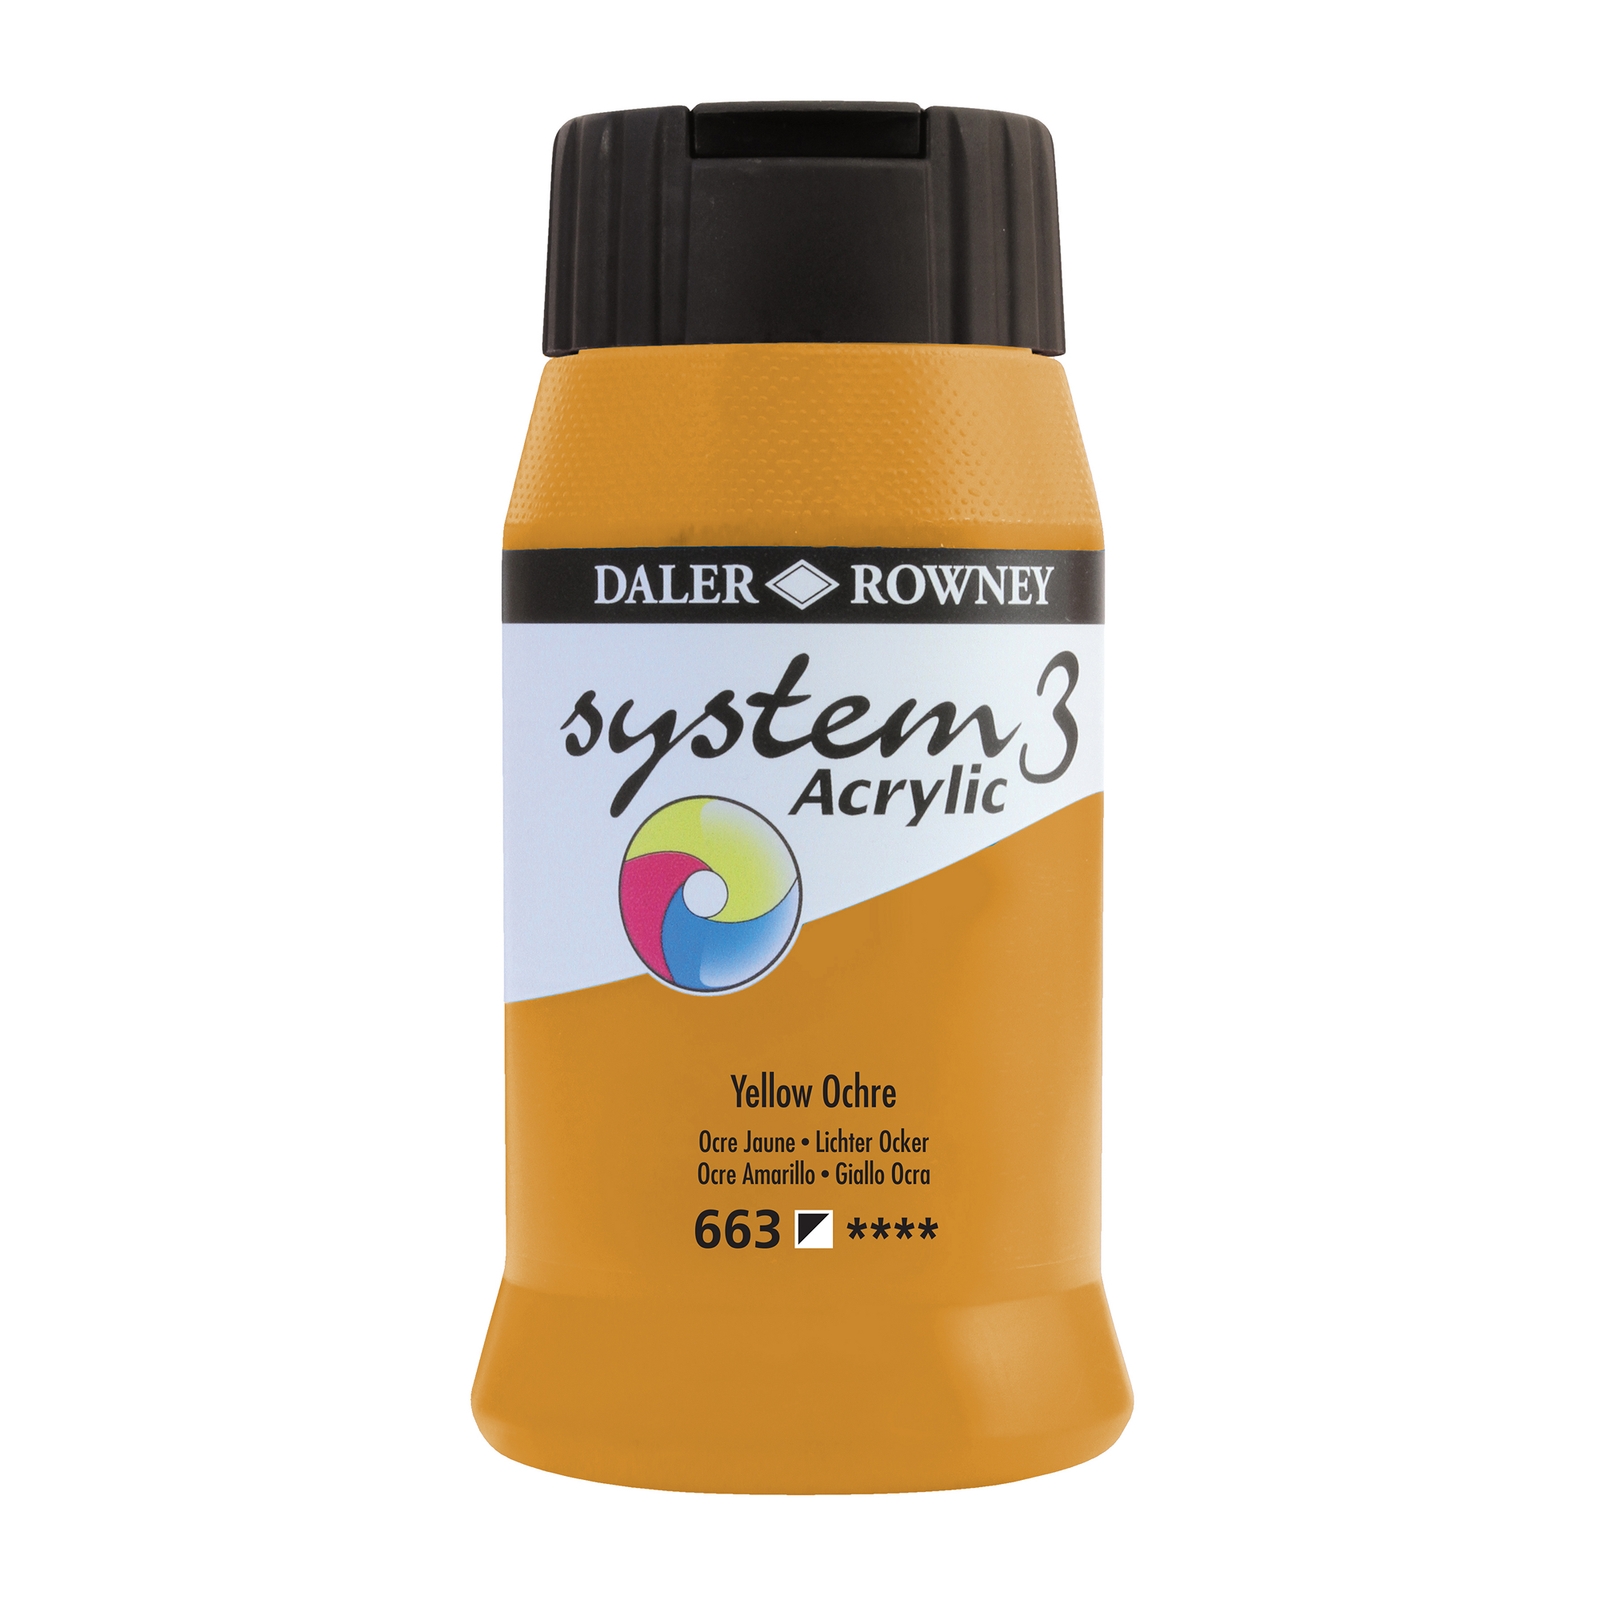 Daler-Rowney System3 Yellow Ochre Acrylic Paint - 500ml - Each